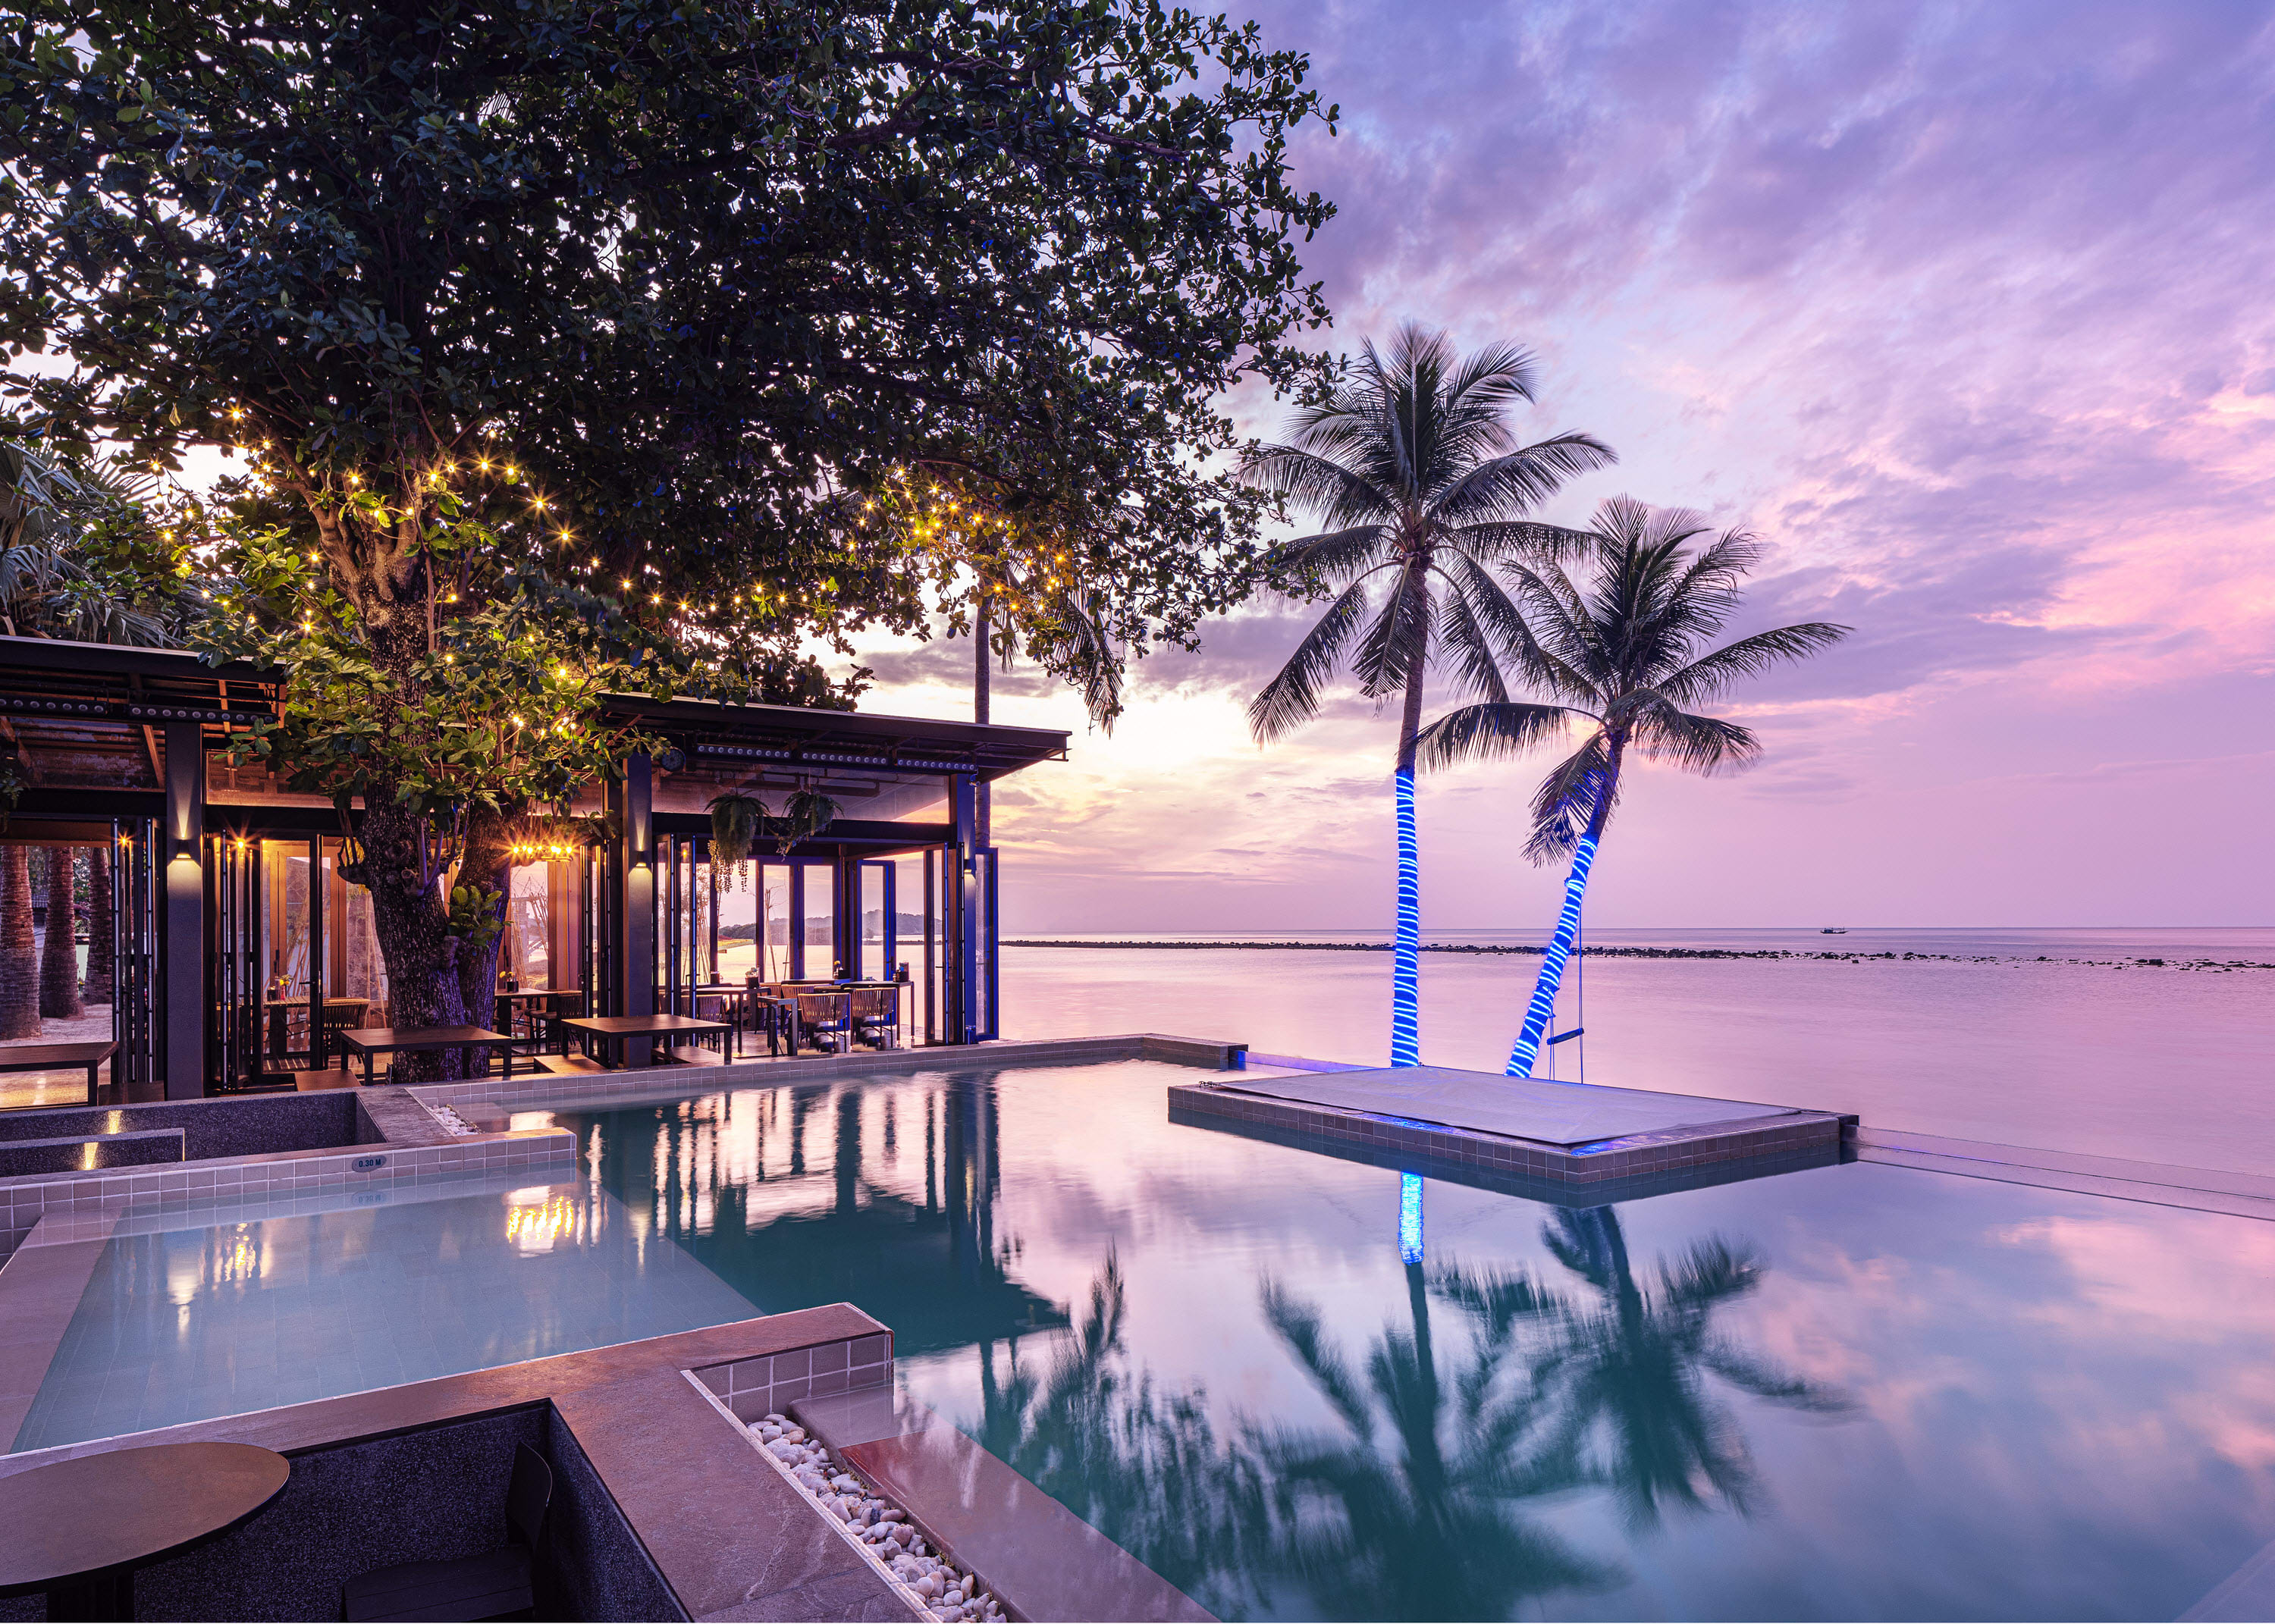 Lub D Koh Samui Chaweng Beach Koh Samui 2021 Prices And Reviews Hostelworld